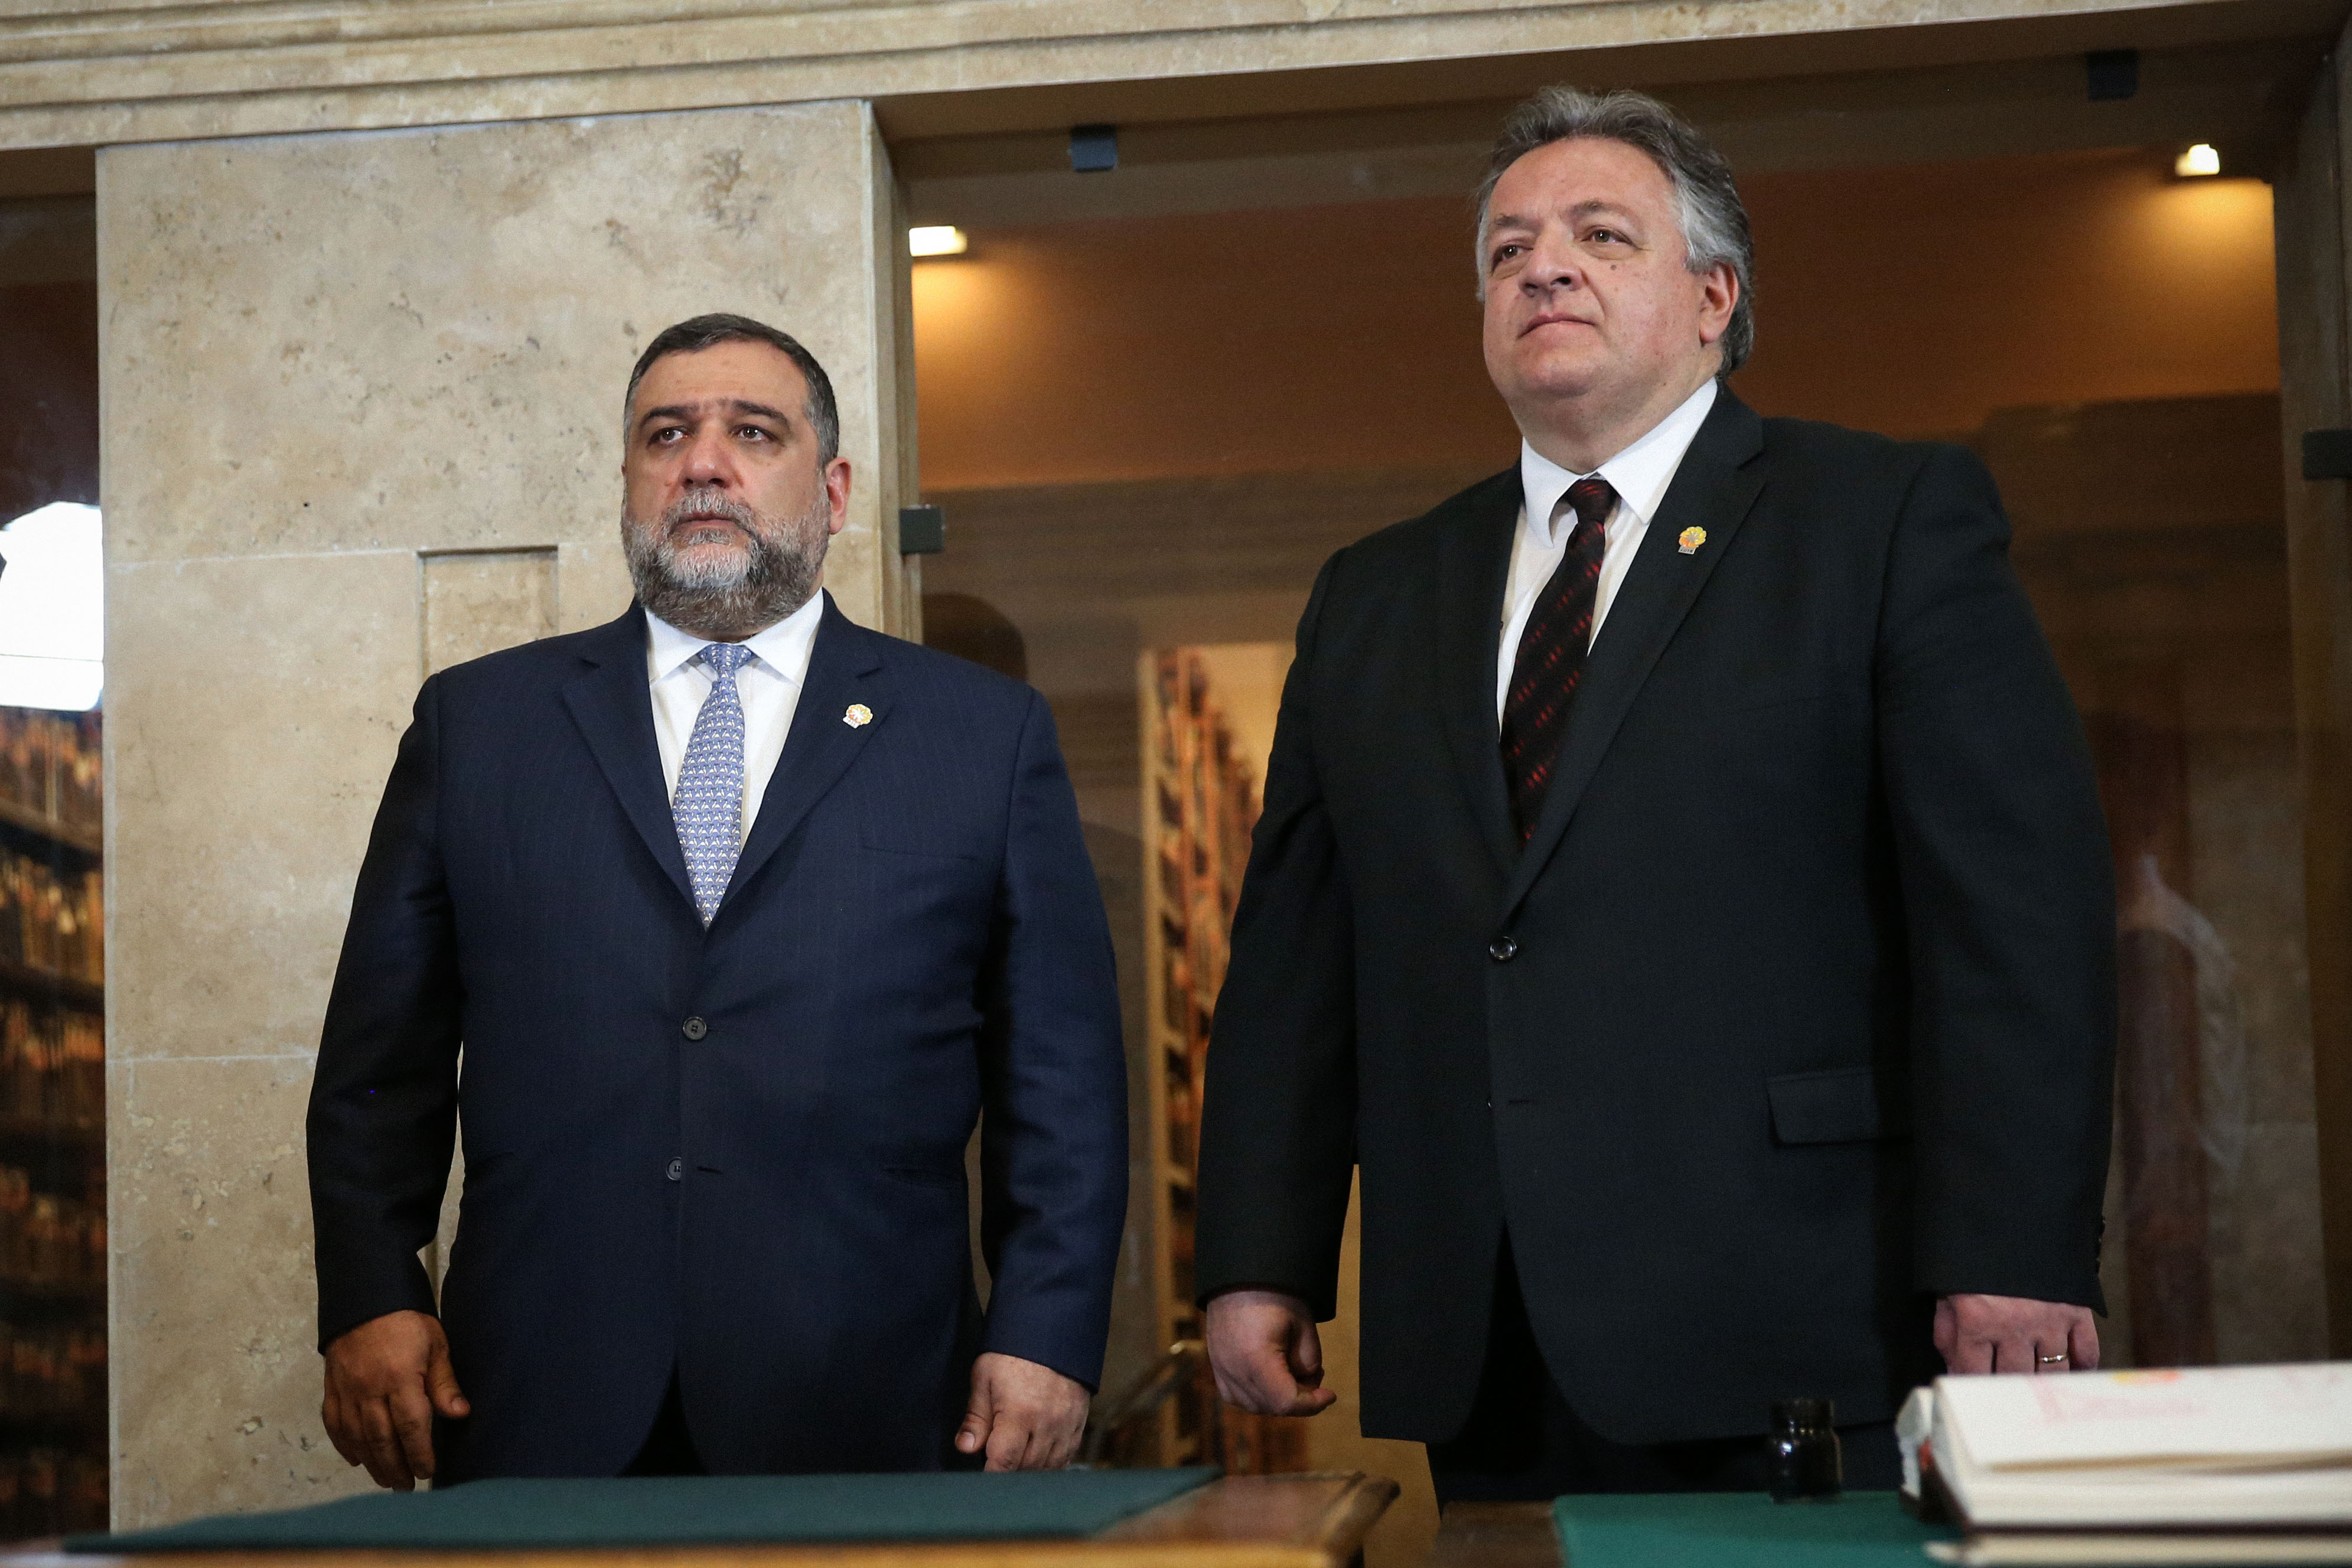 Ruben Vardanyan and Noubar Afeyan congratulate Nikol Pashinyan on his election as Prime Minister of Armenia